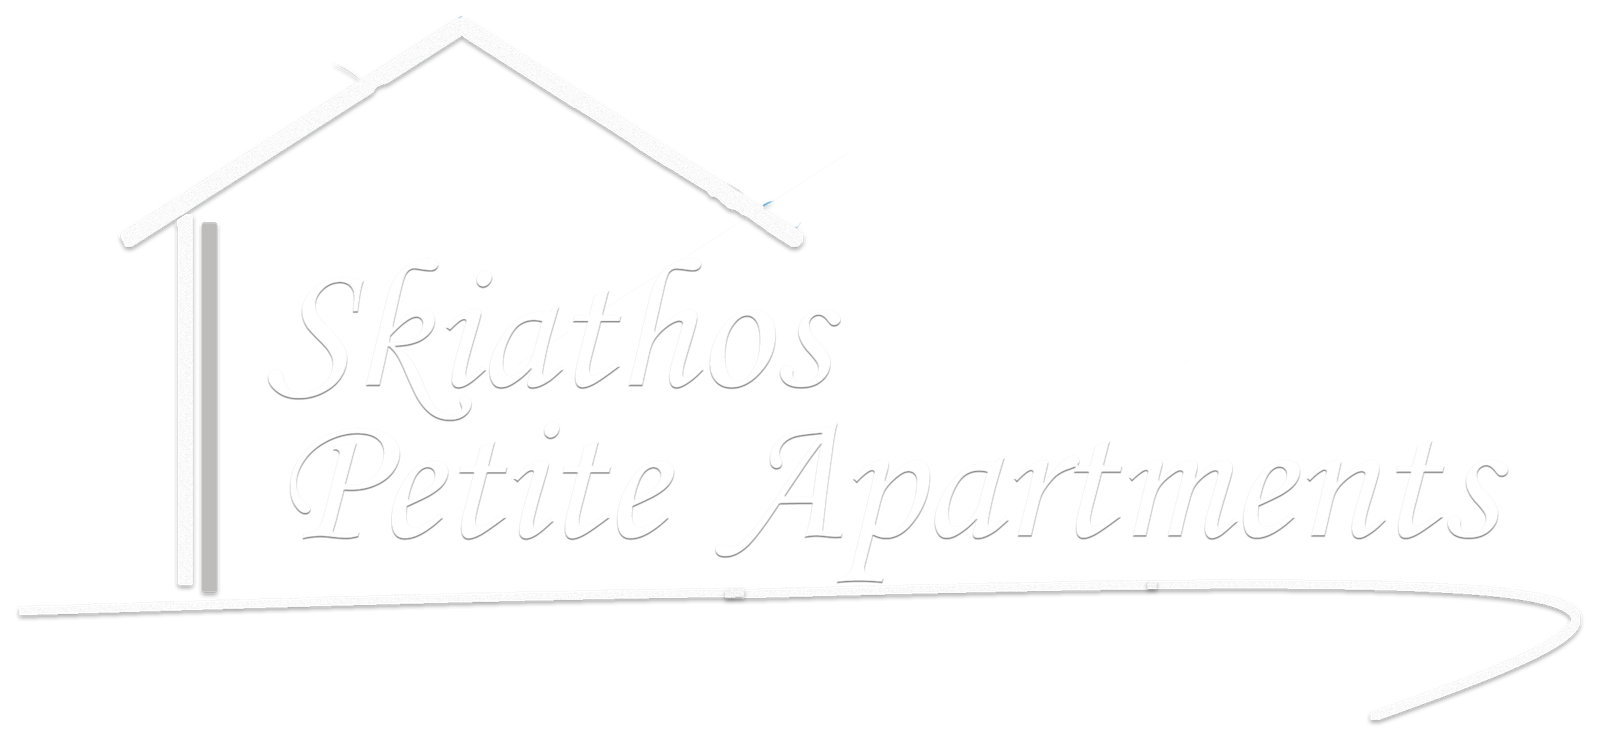 Skiathos Petite Apartments | Hotel & Car Offer - Skiathos Petite Apartments